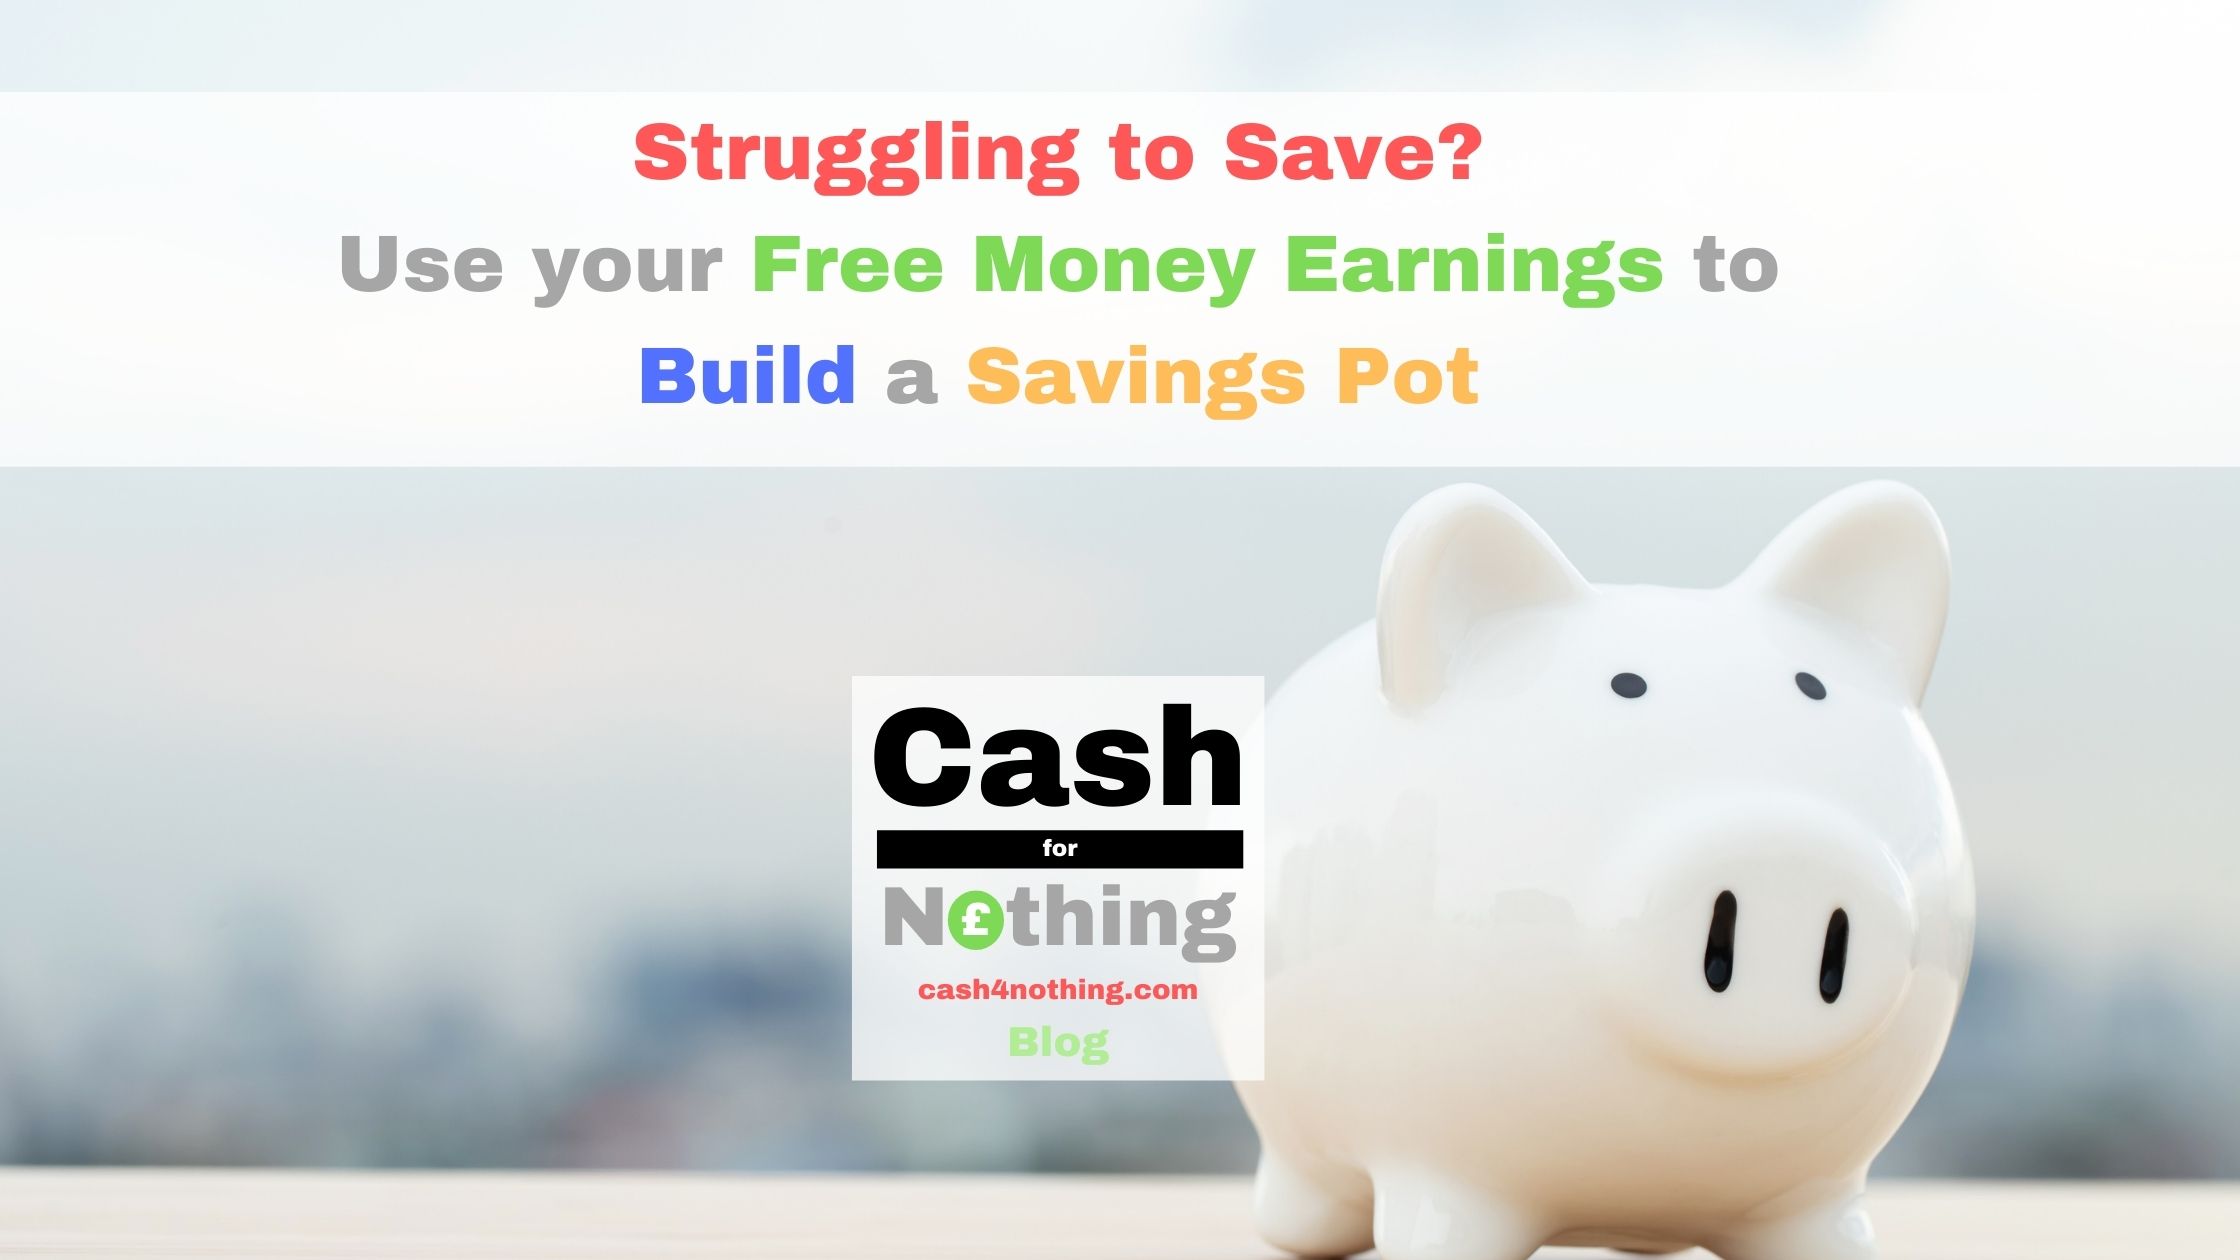 Free Money to Build a Savings Pot